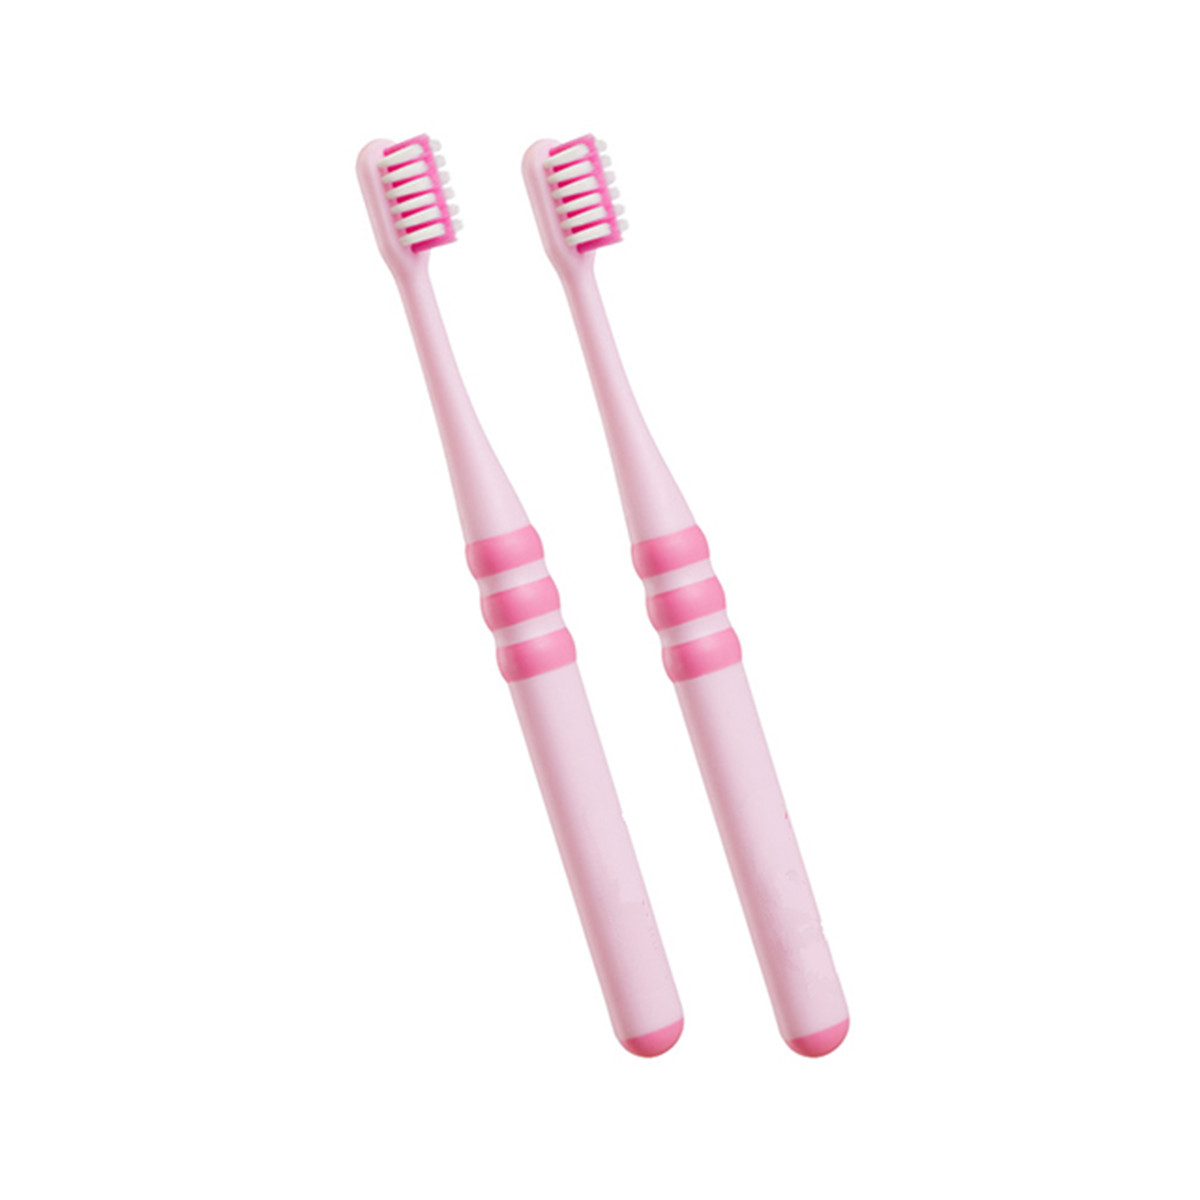 Купить зубную щетку для ребенка. Зубная щетка Xiaomi Dr bei розовая. Зубная Сяоми щетка детская. Зубная щетка Chicco 320617016. Зубная щетка детская Tooth Brush.